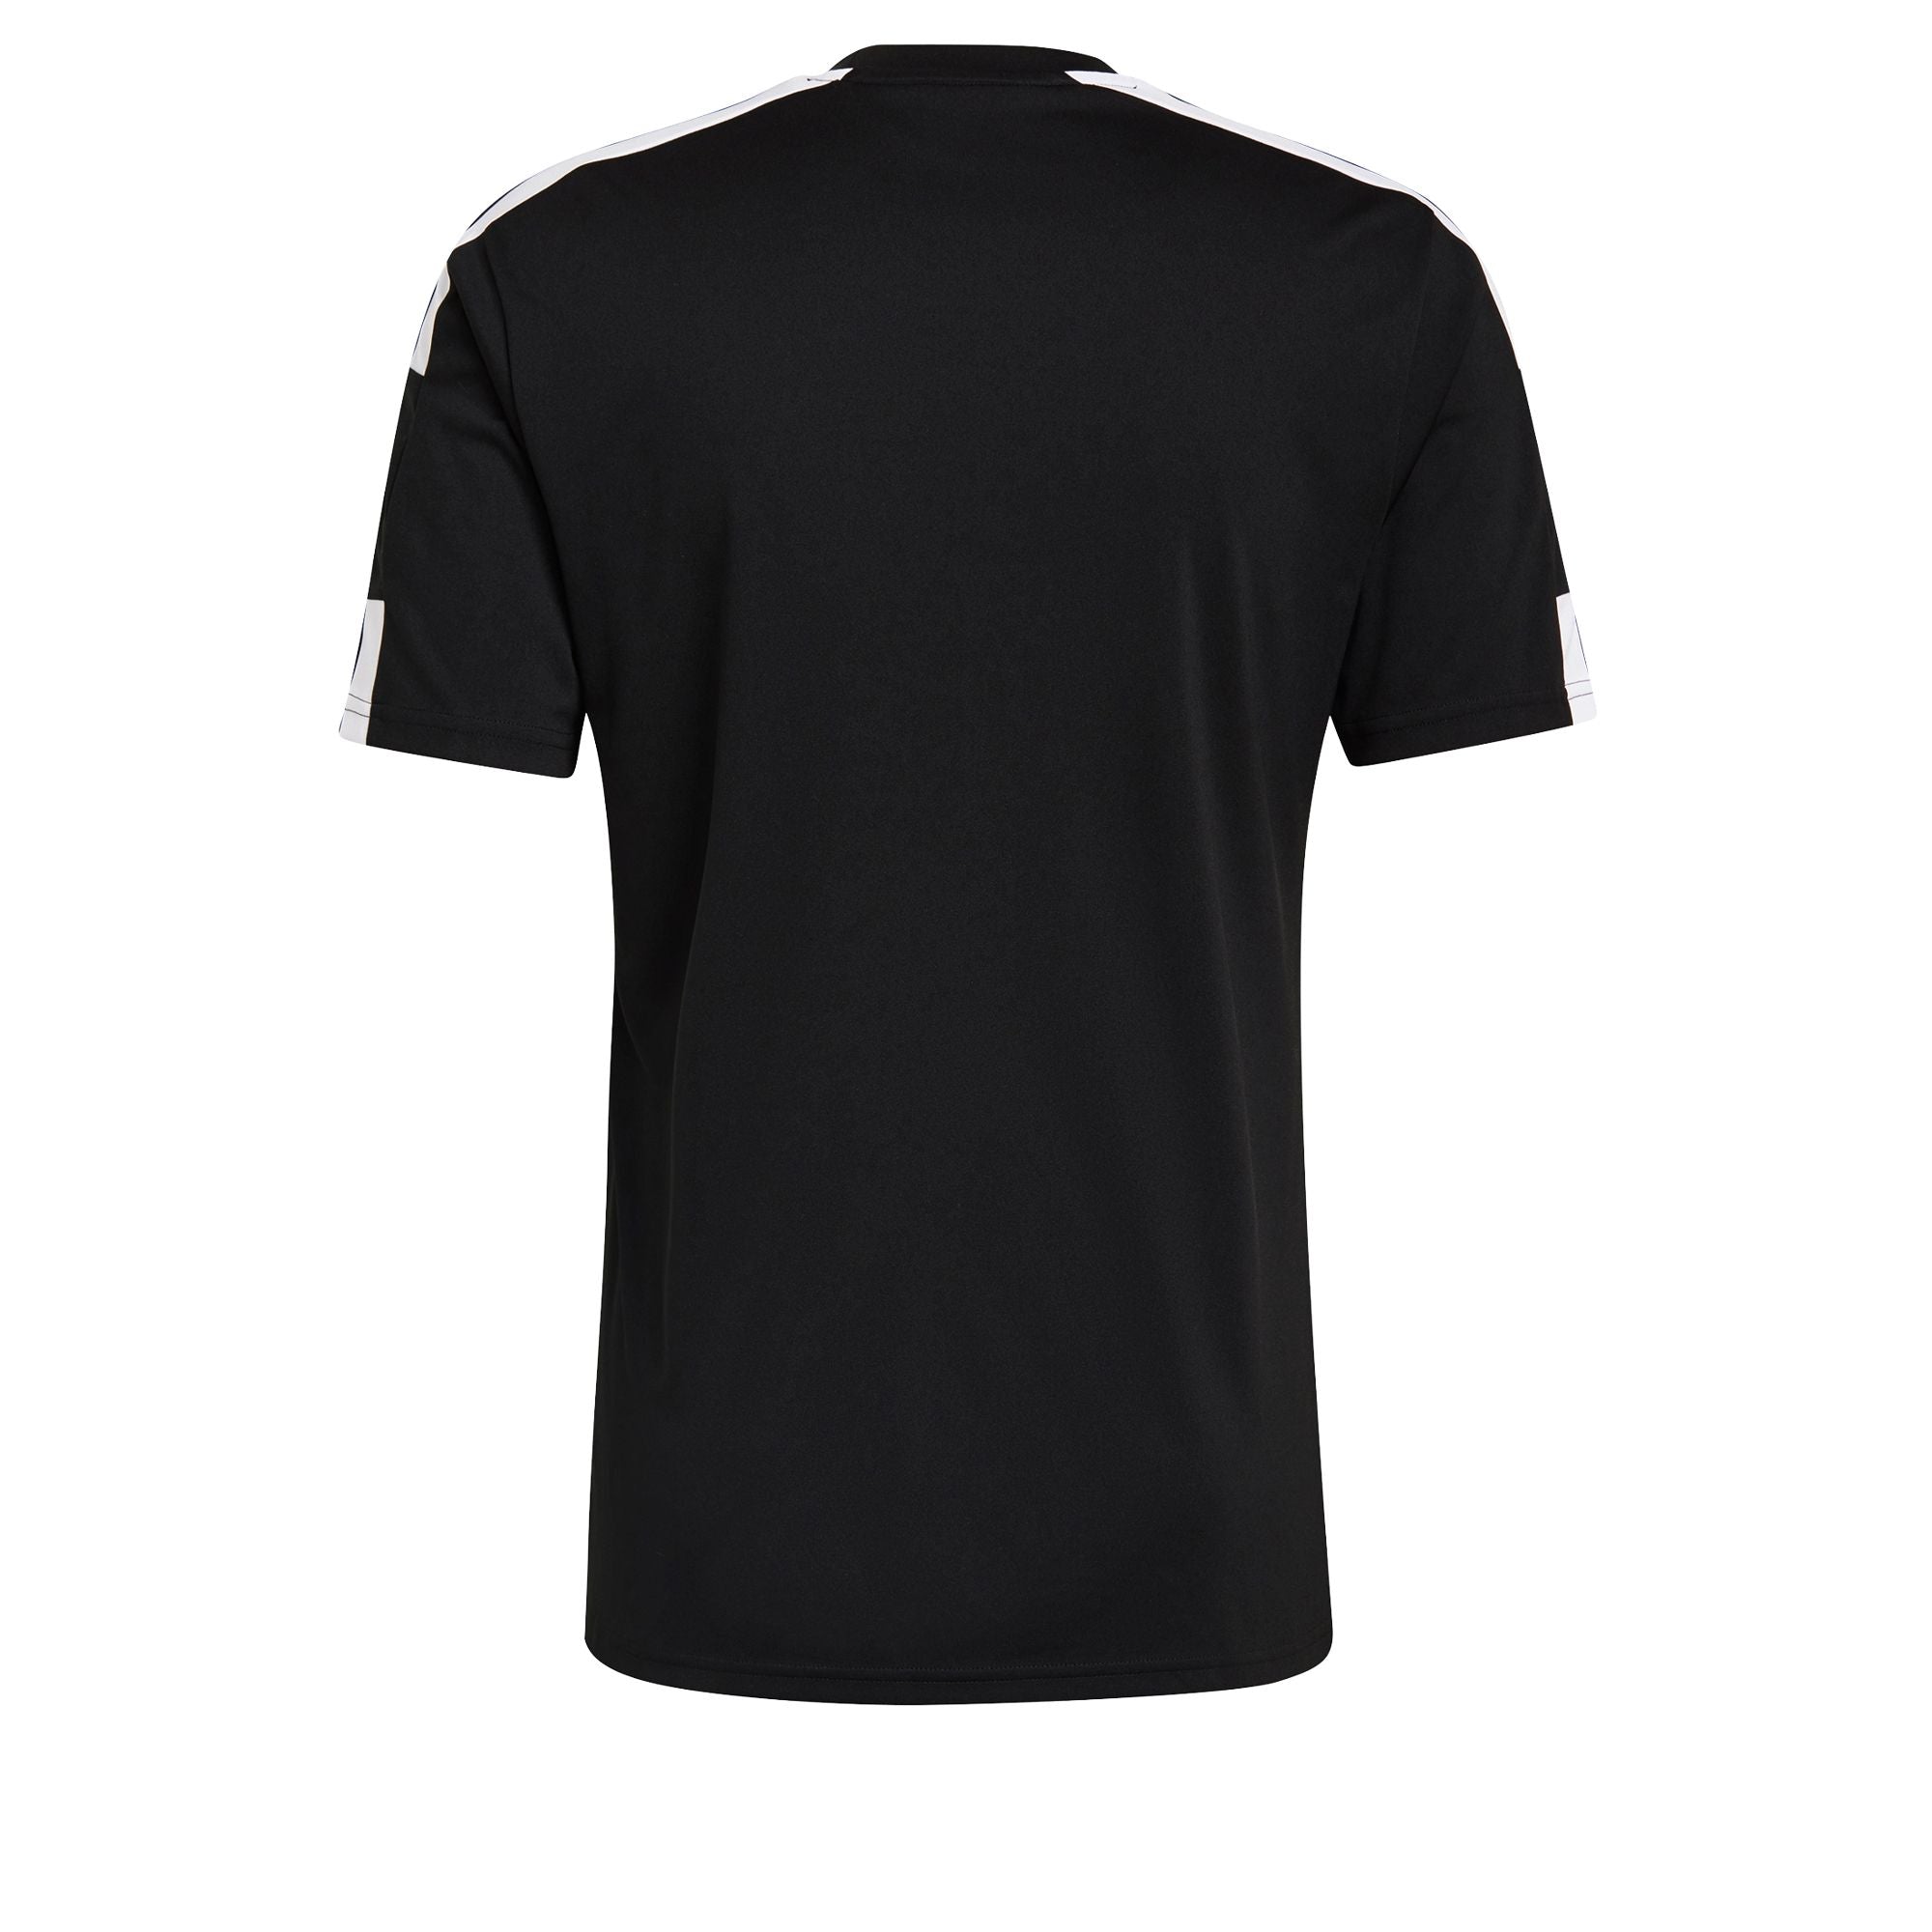 Adidas T-shirt tecnica GN5720 nero bianco